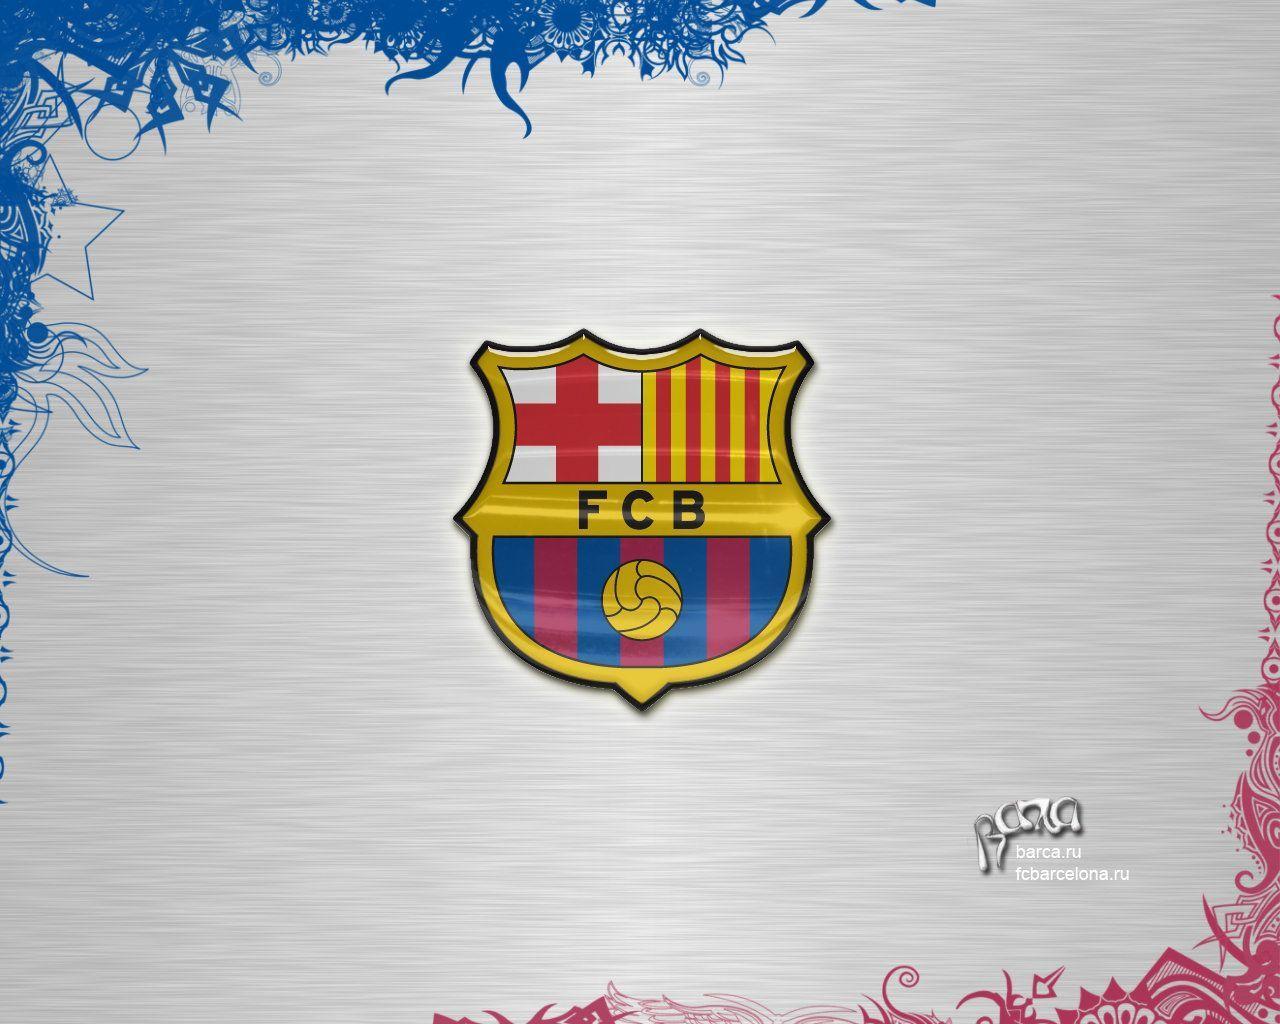 F.C. Barcelona Info, Imágenes y Wallpaper HD [MegaPost]!